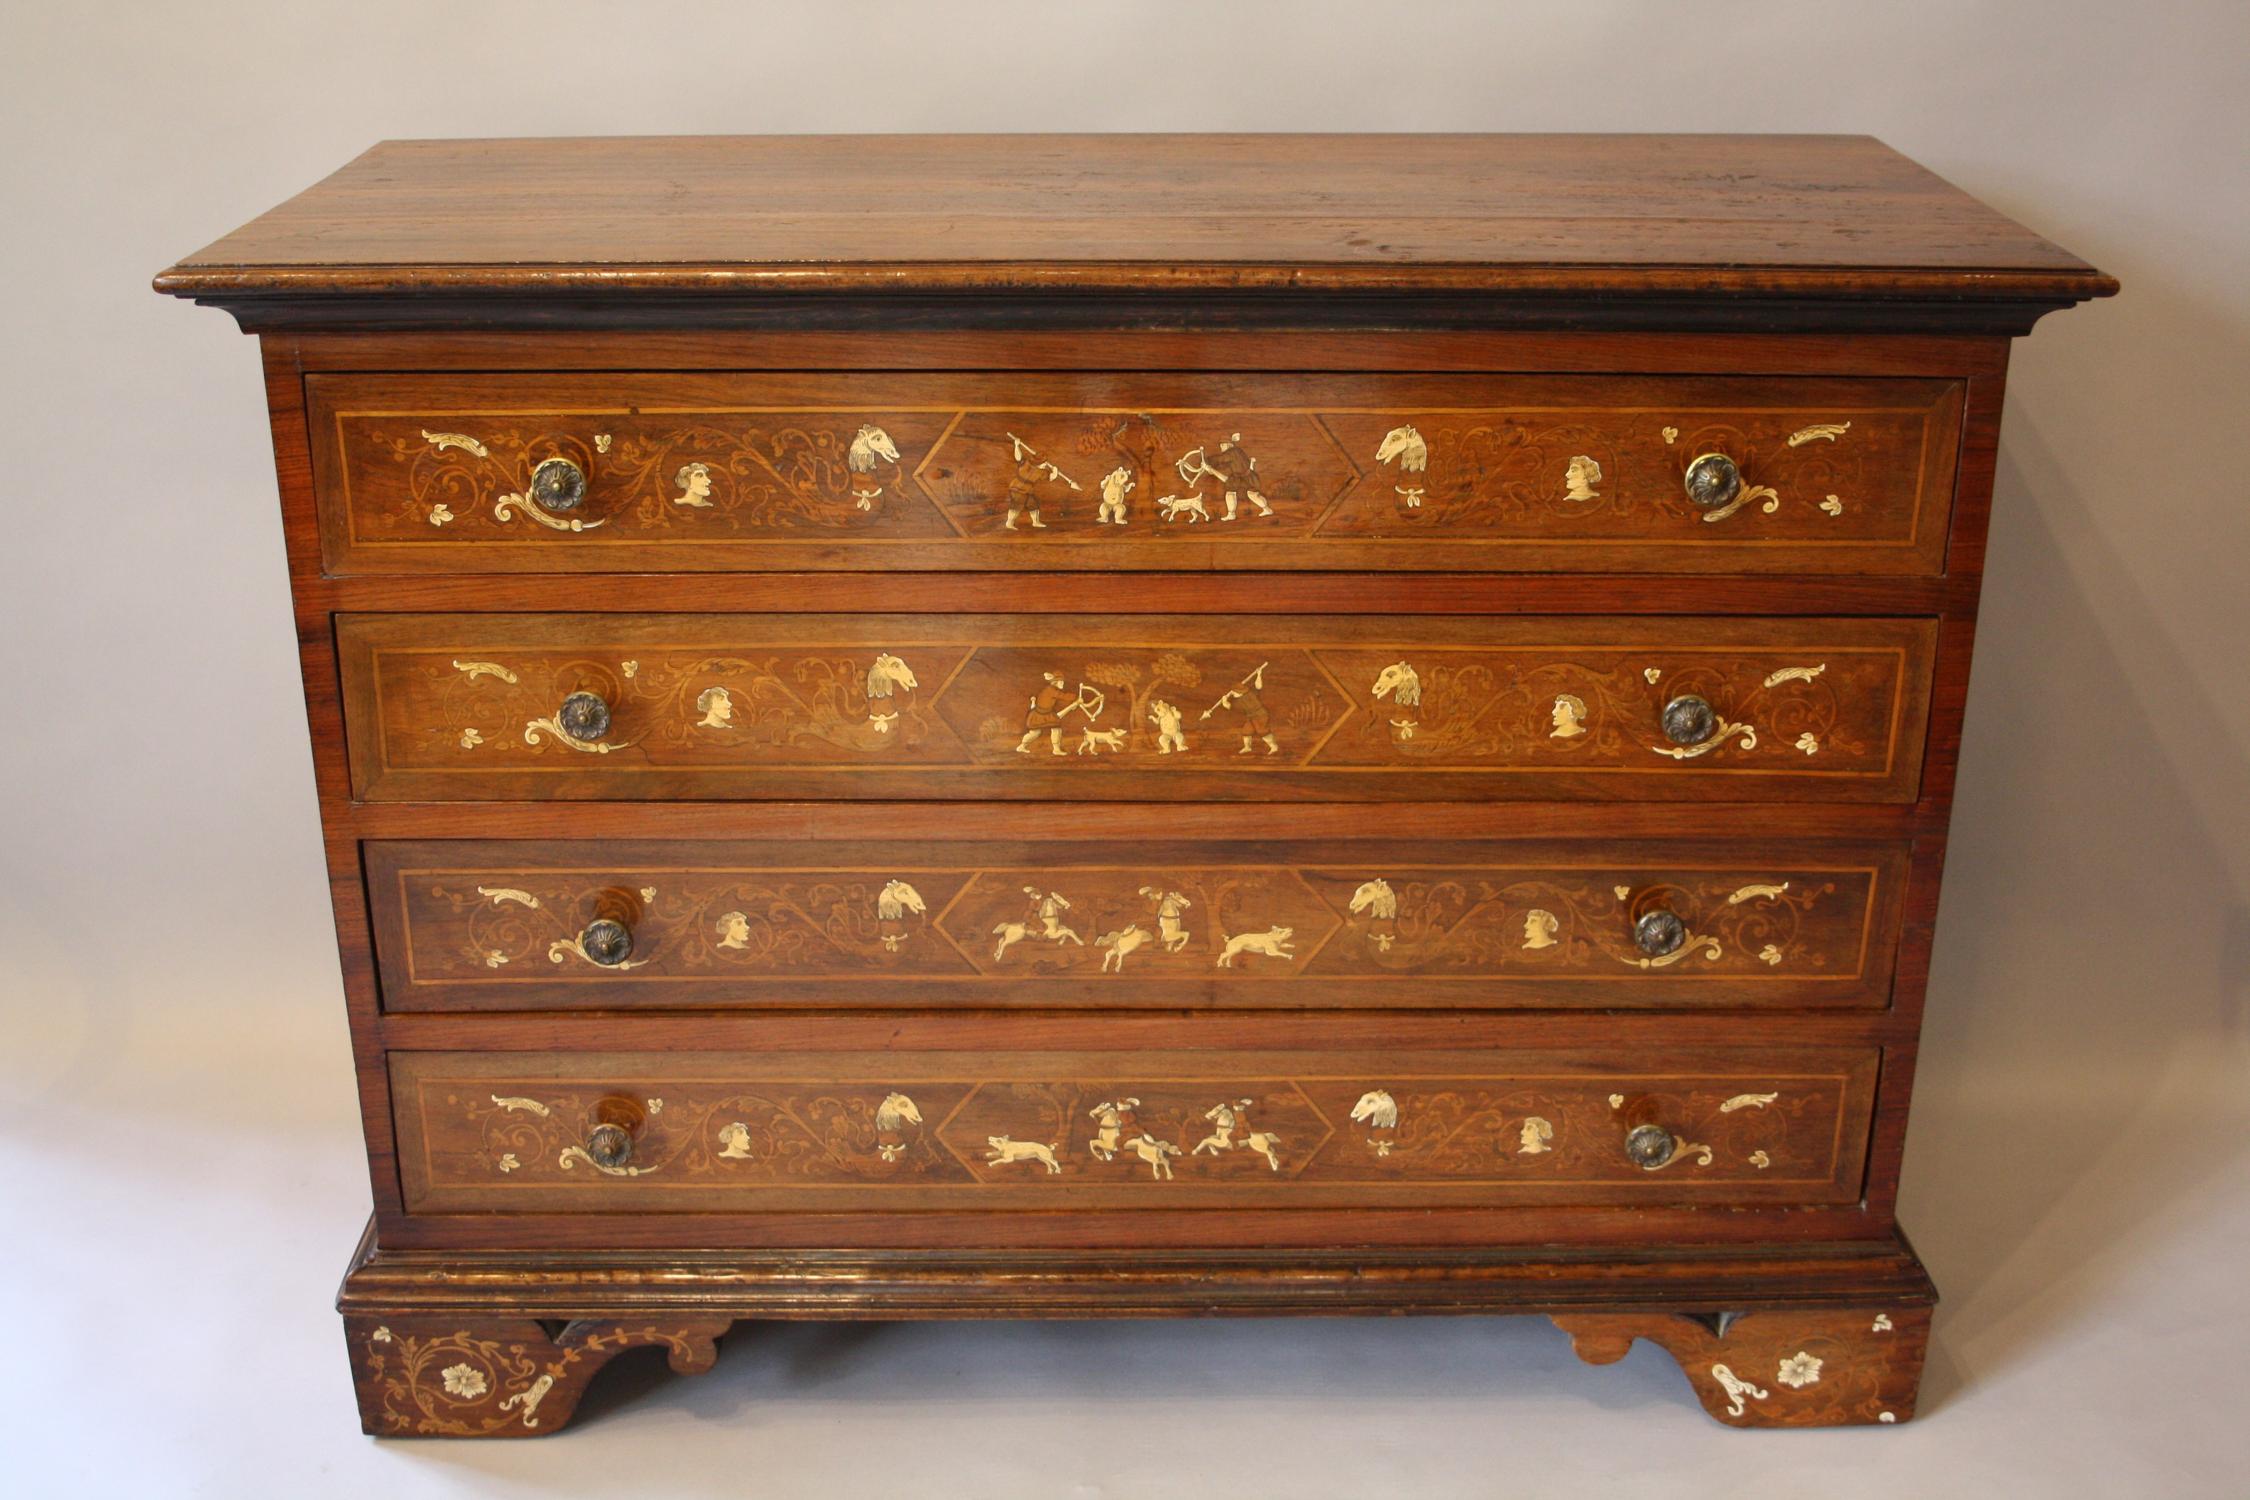 Walnut inlaid chest of drawers